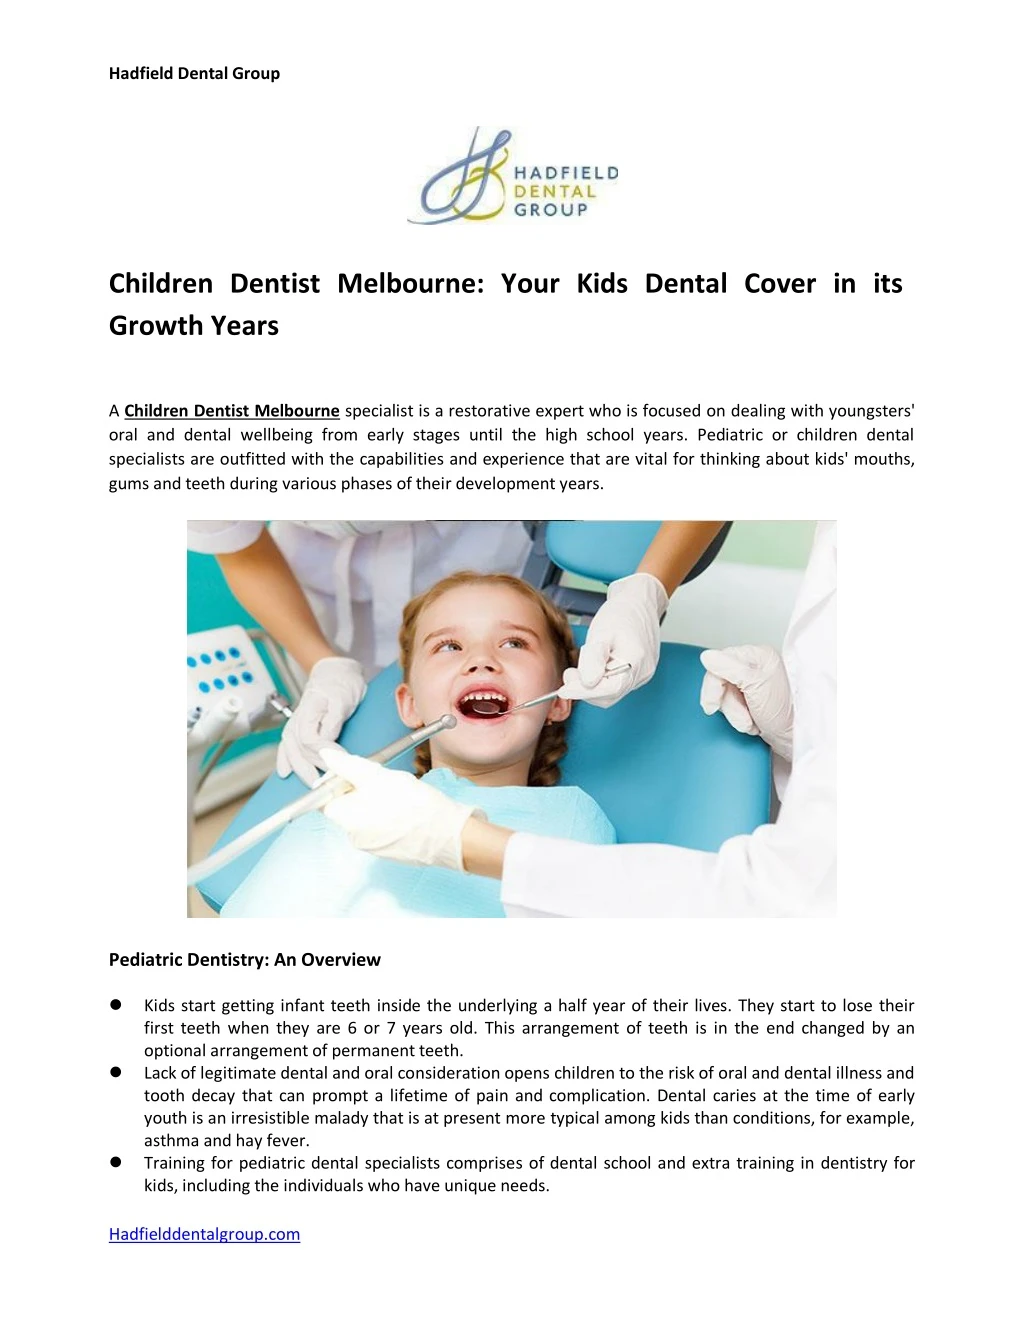 hadfield dental group